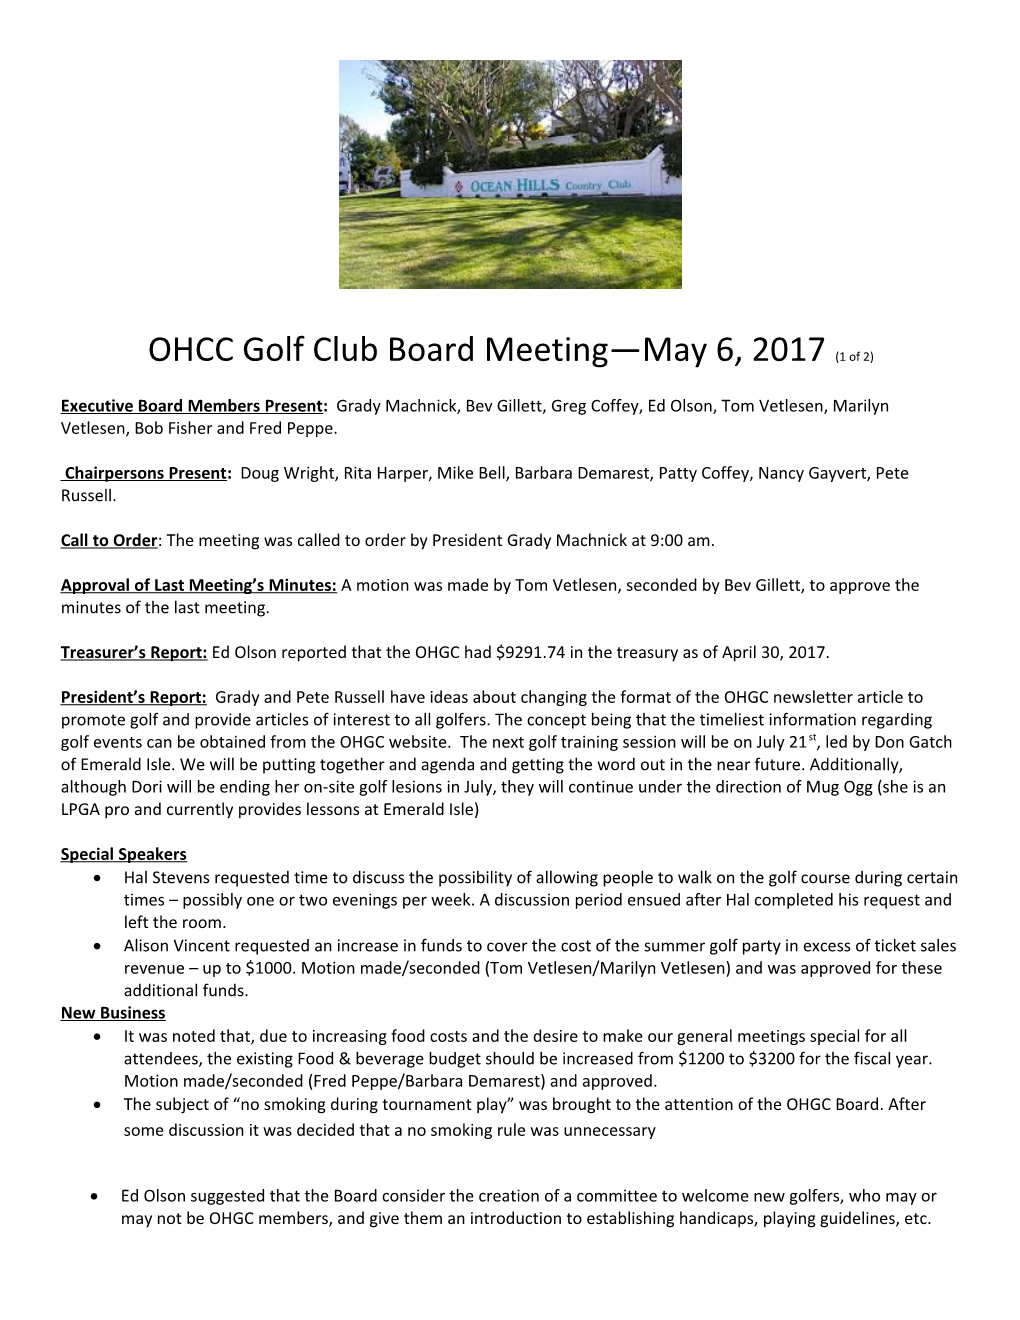 OHCC Golf Club Board Meeting May 6, 2017(1 of 2)